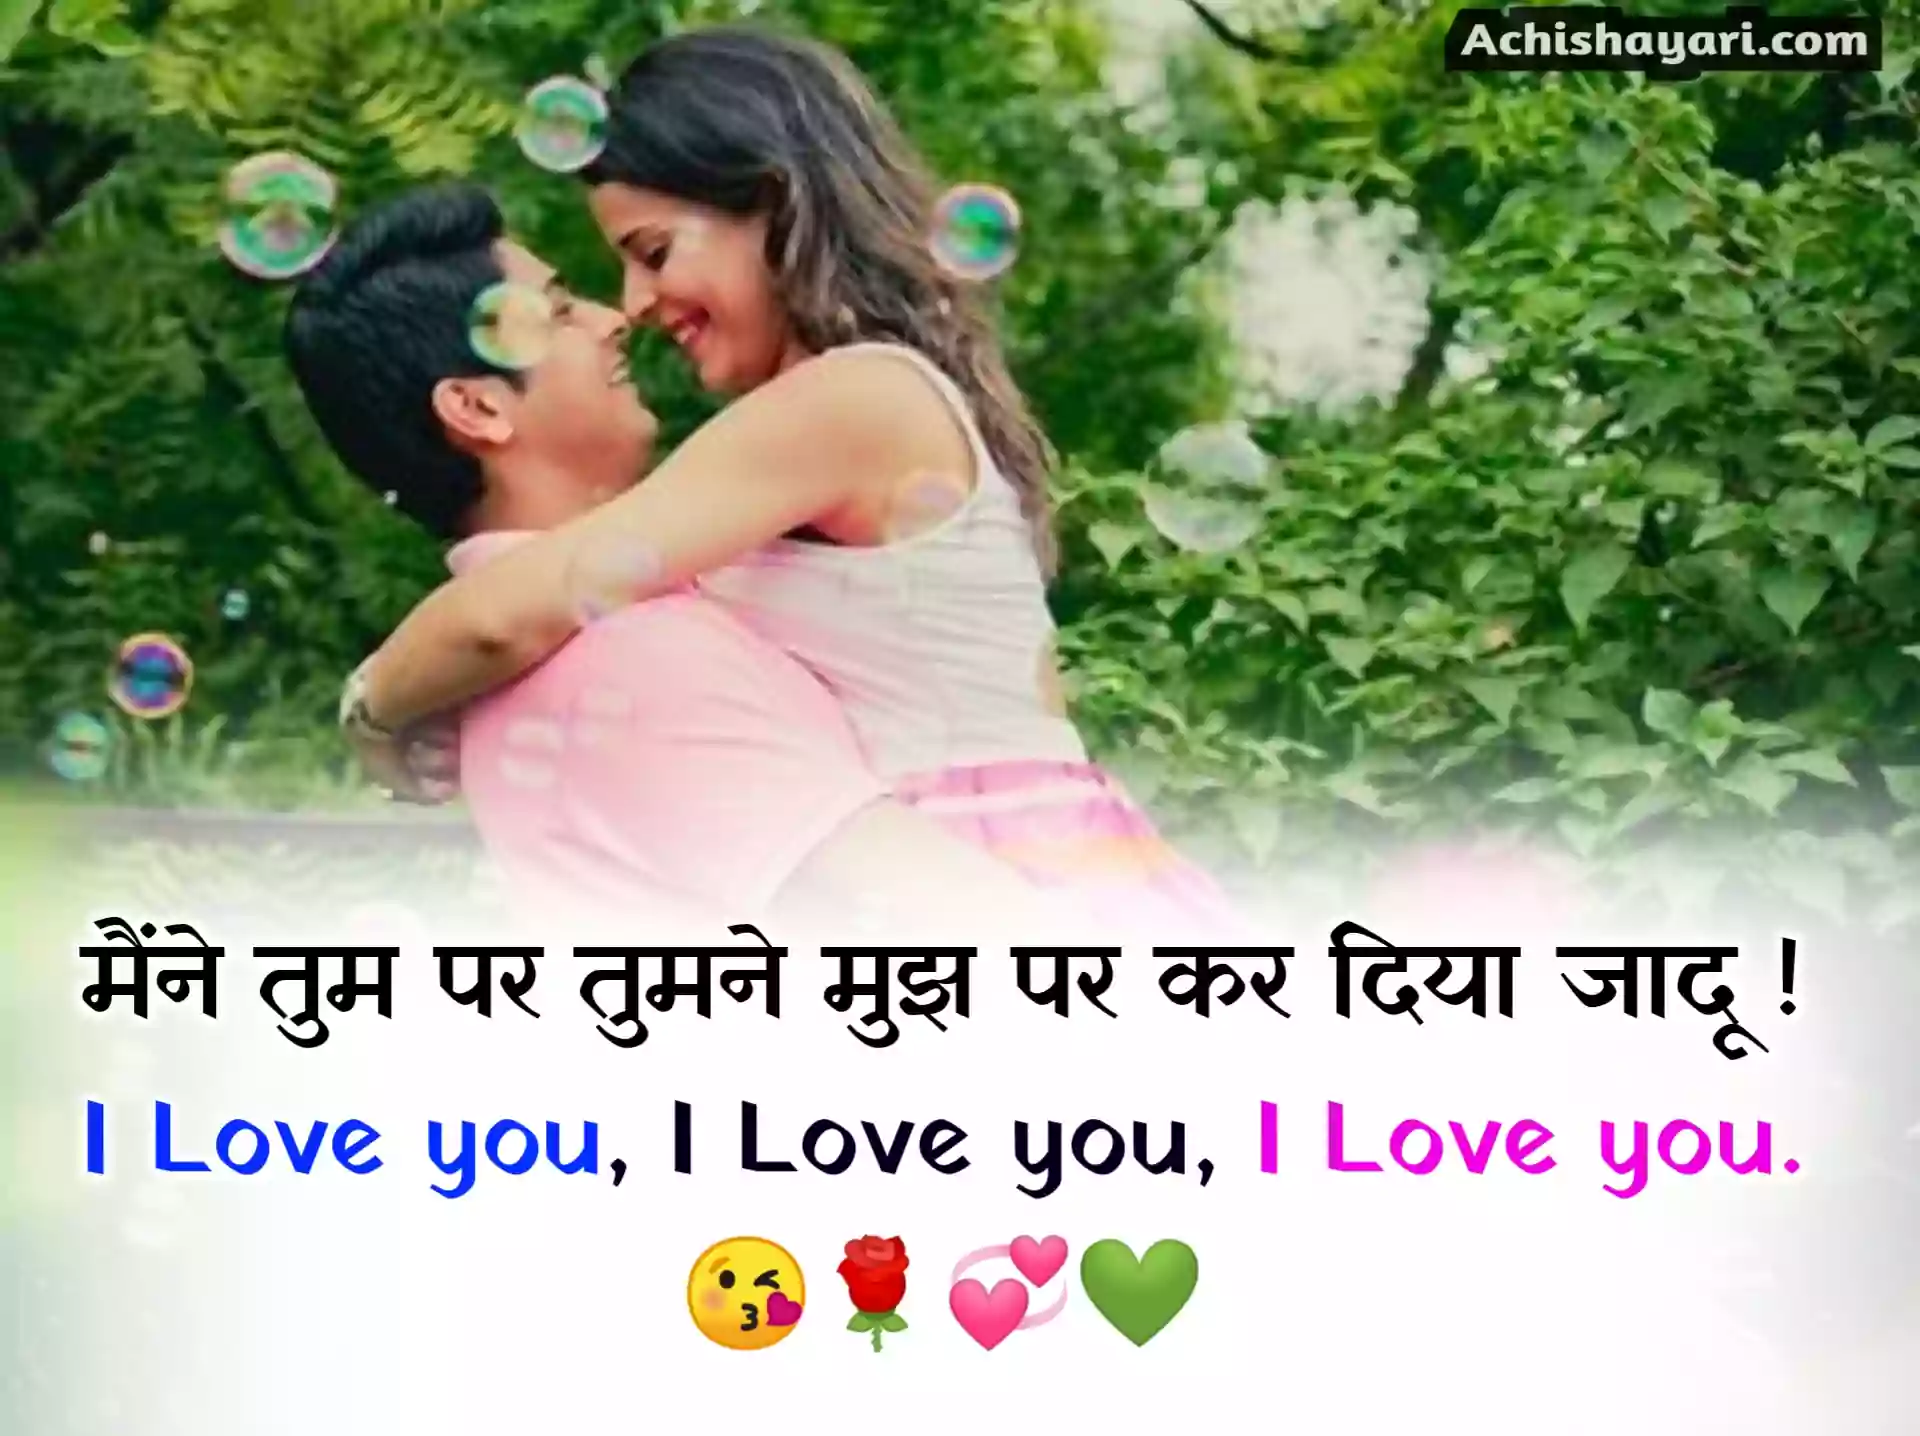 I Love You Shayari Hindi Image